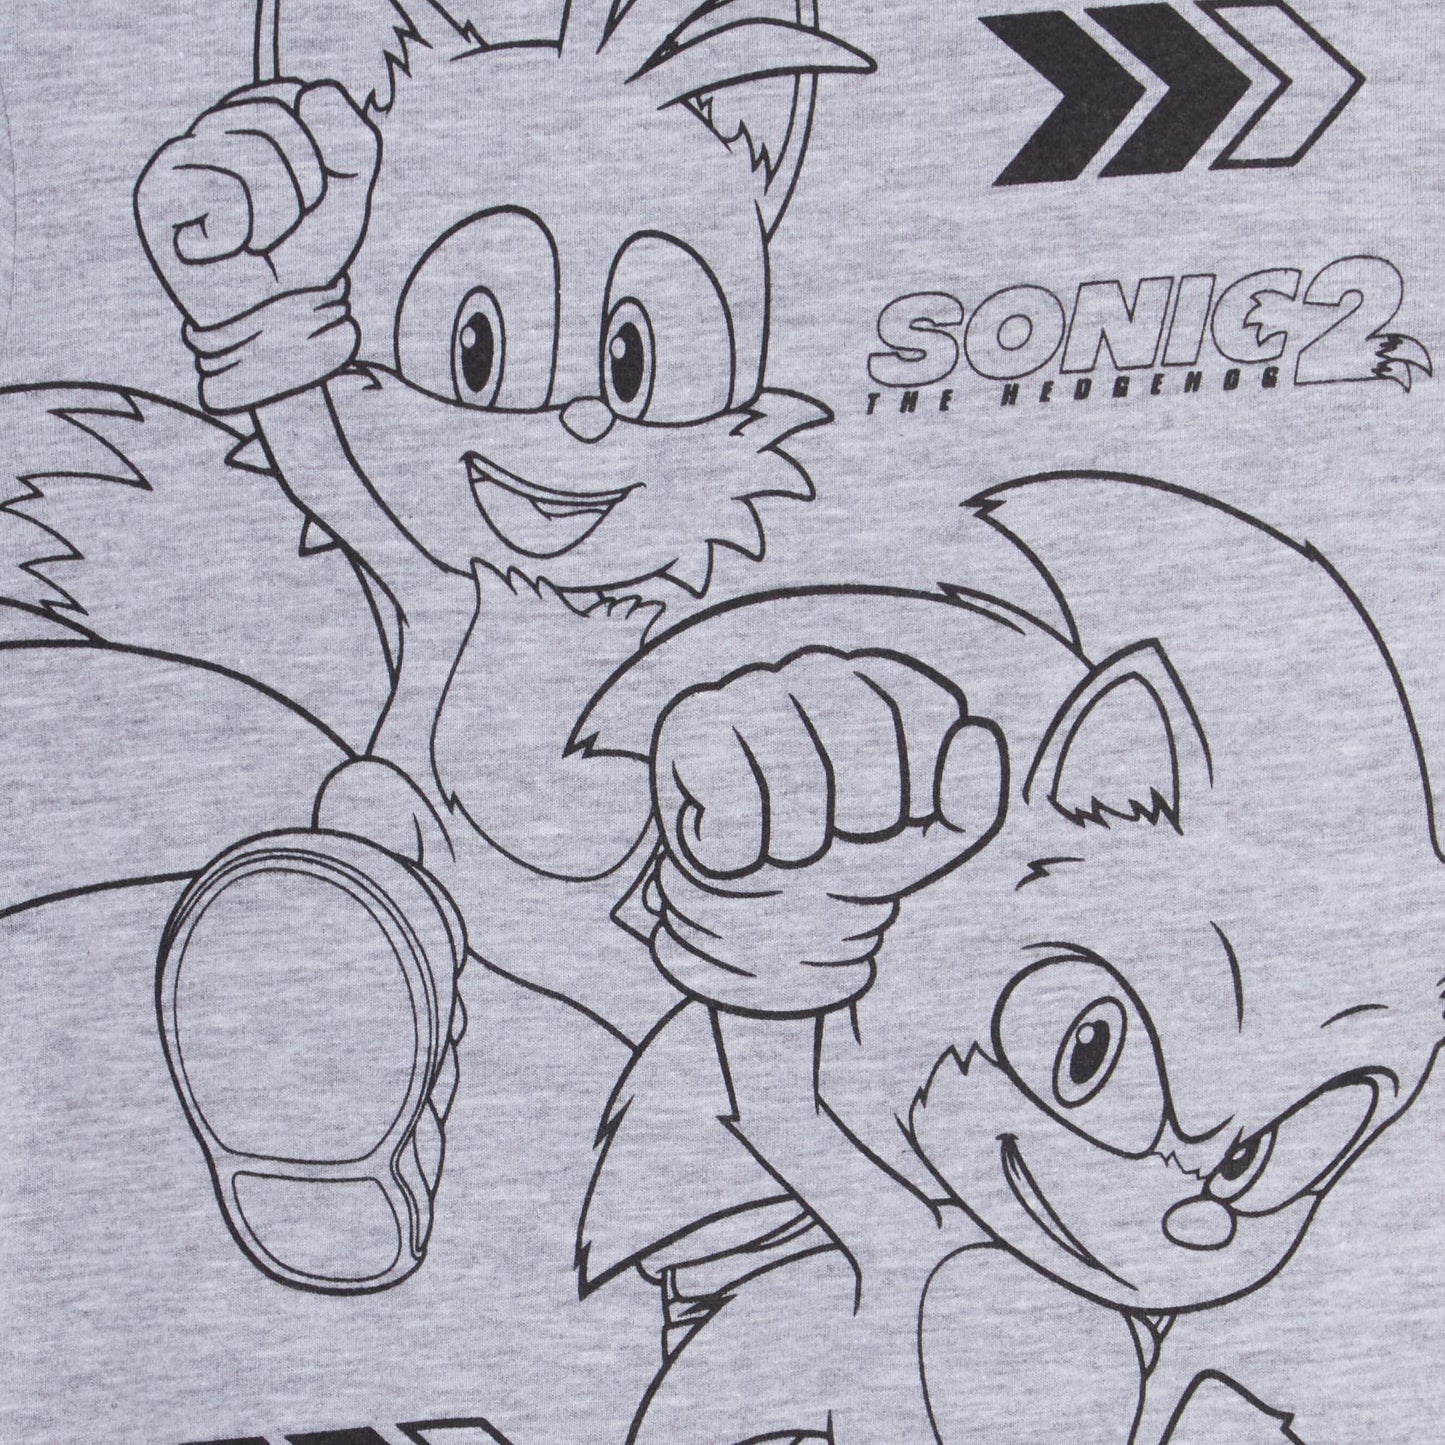 Sonic The Hedgehog Boys 3 Pack T-Shirts Kids Gamer Tops Short Sleeved Tees Multipack 7-8Y